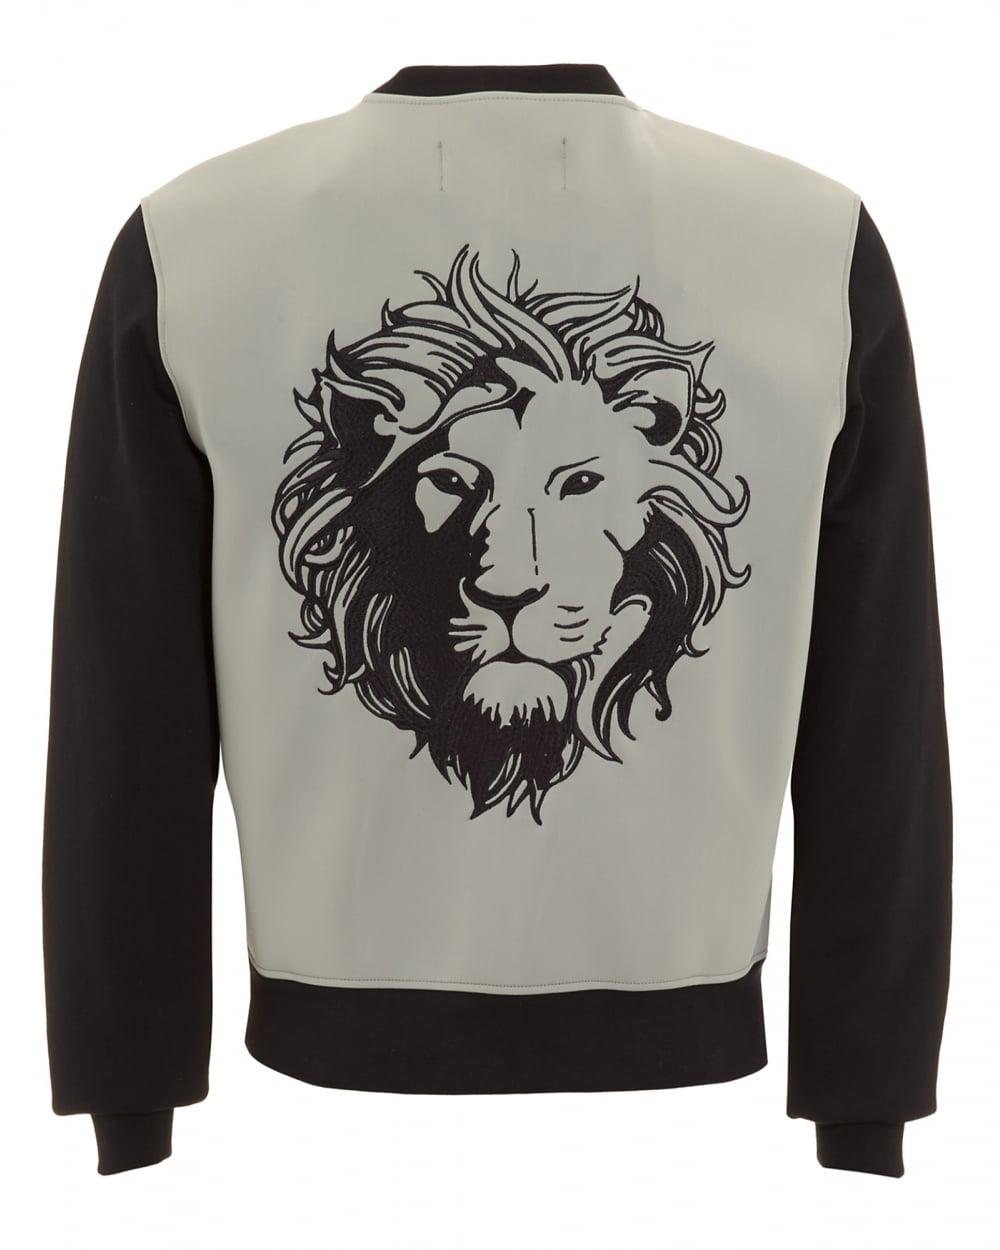 Versace with Lion Logo - Versus Versace Mens Jacket, Lion Logo Black and Grey Baseball Jacket